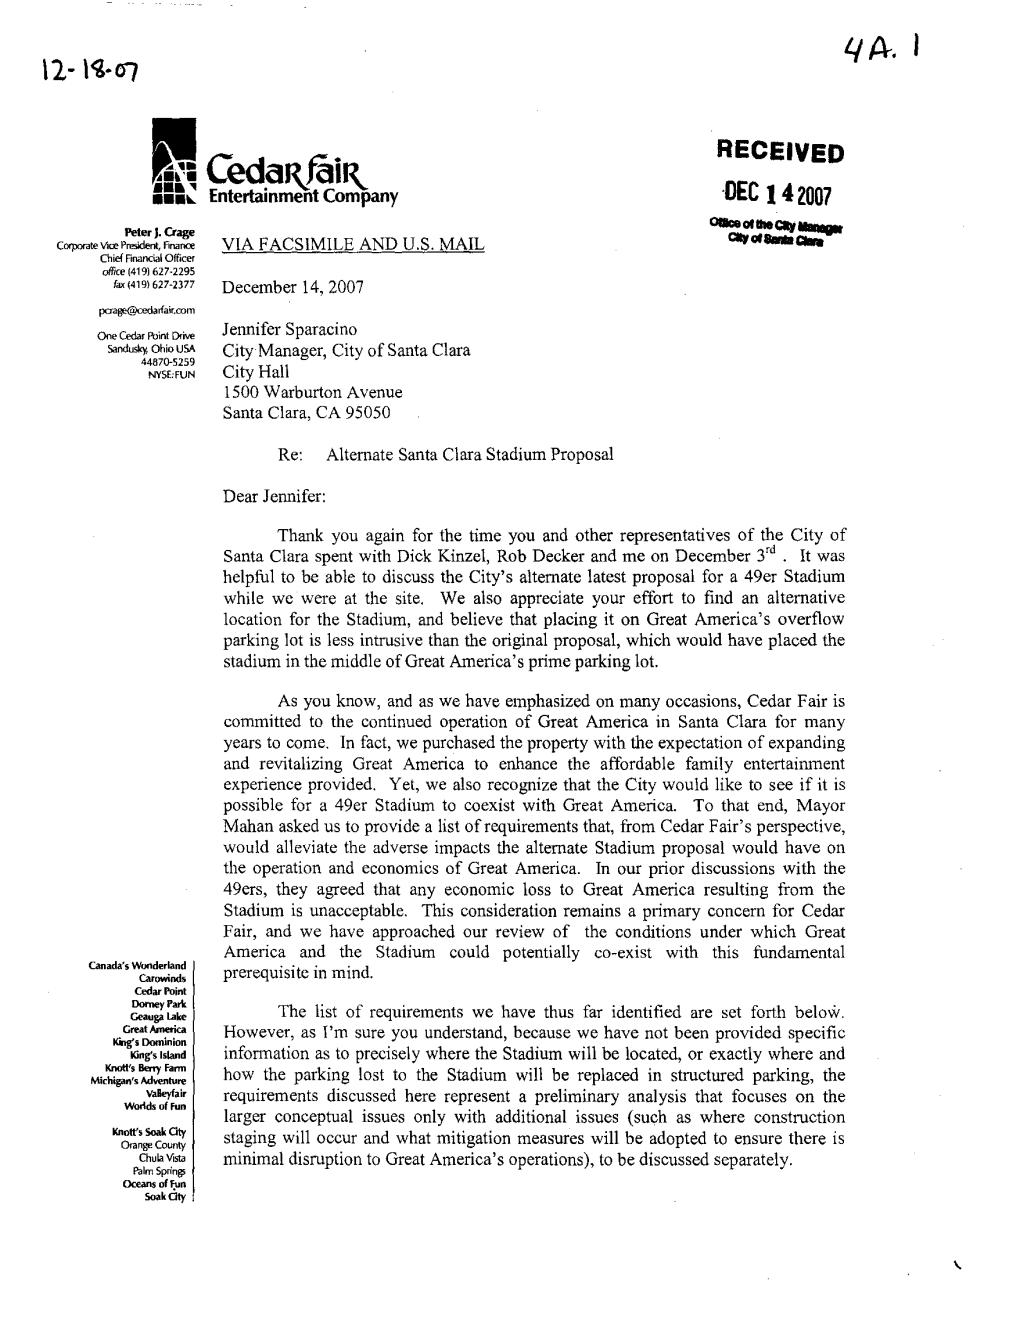 Letter from Cedar Fair Entertainment Company Regarding Alternate Santa Clara Stadium Proposal